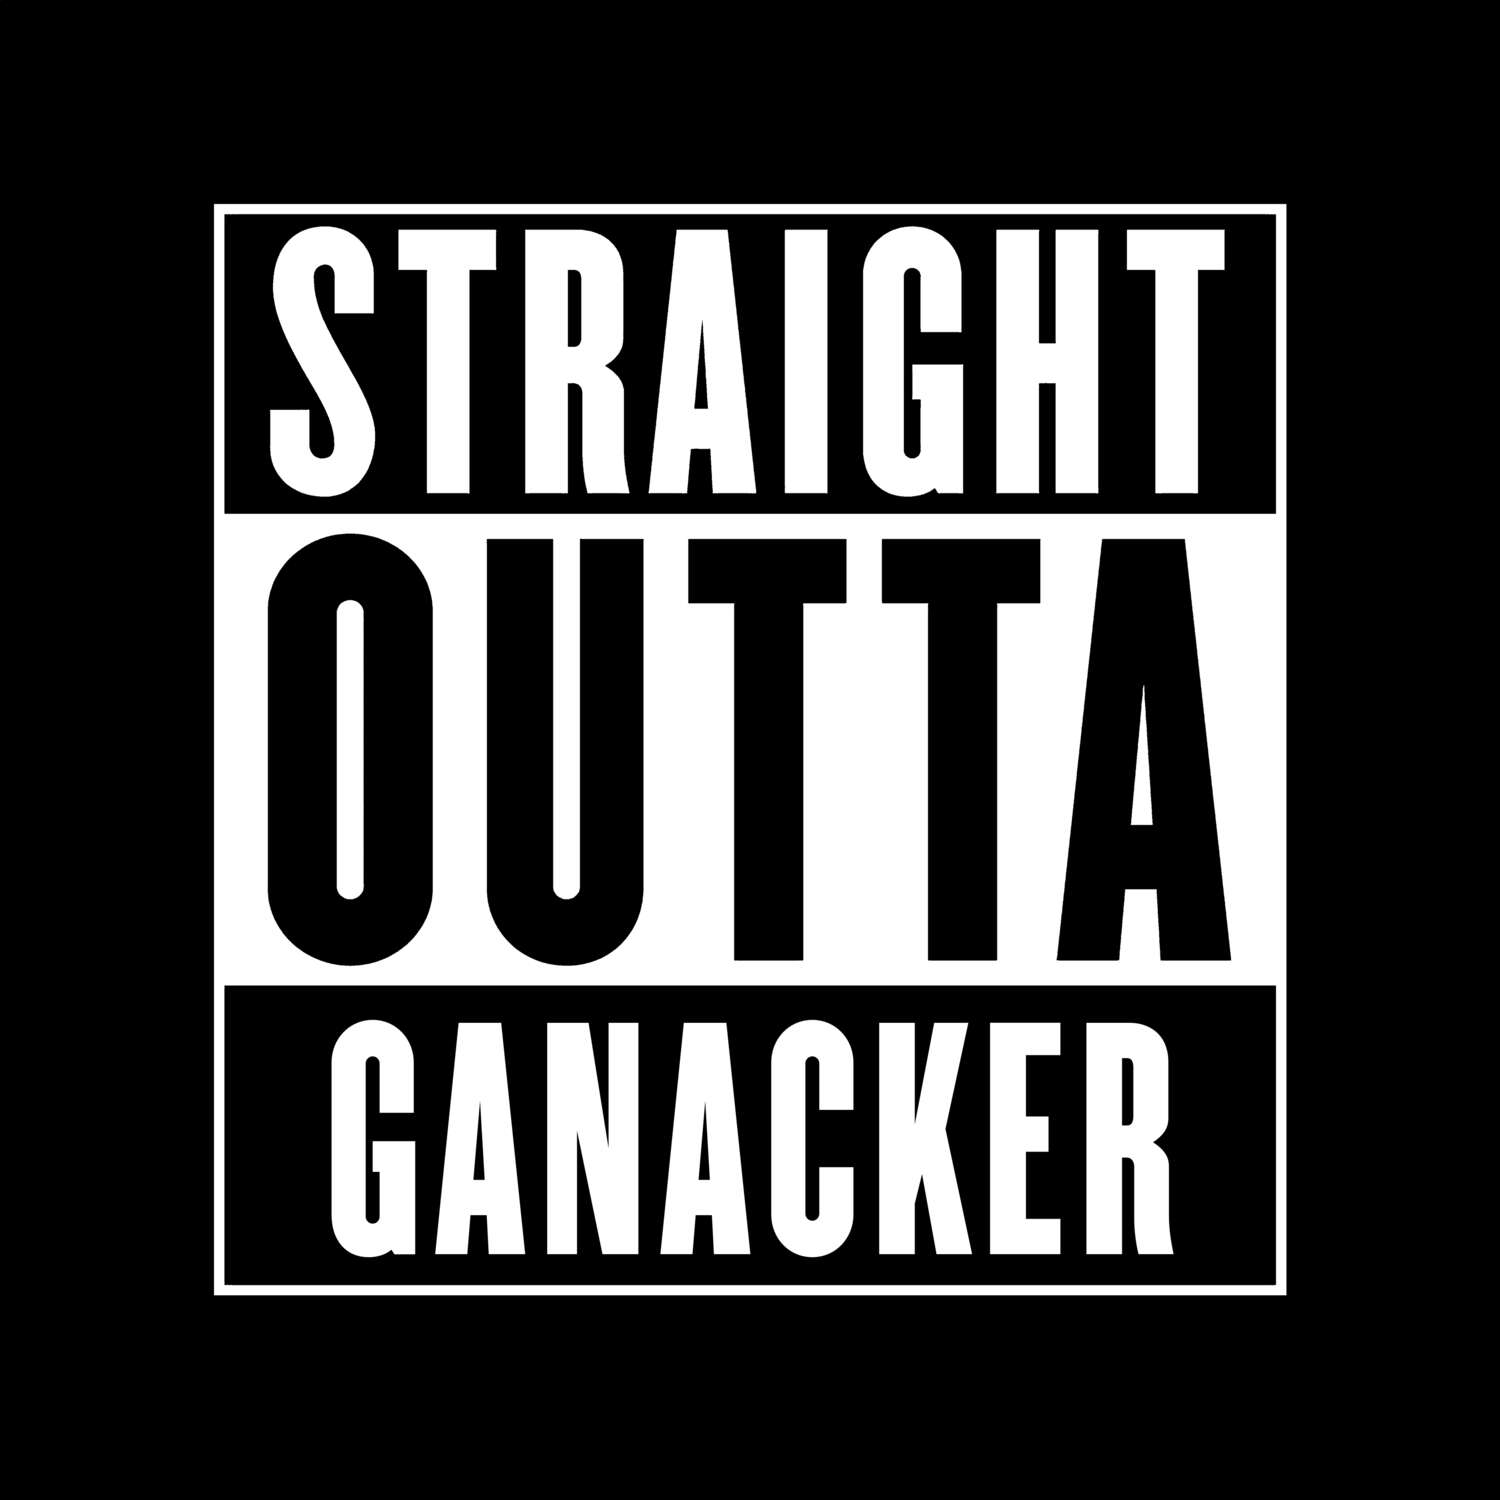 Ganacker T-Shirt »Straight Outta«